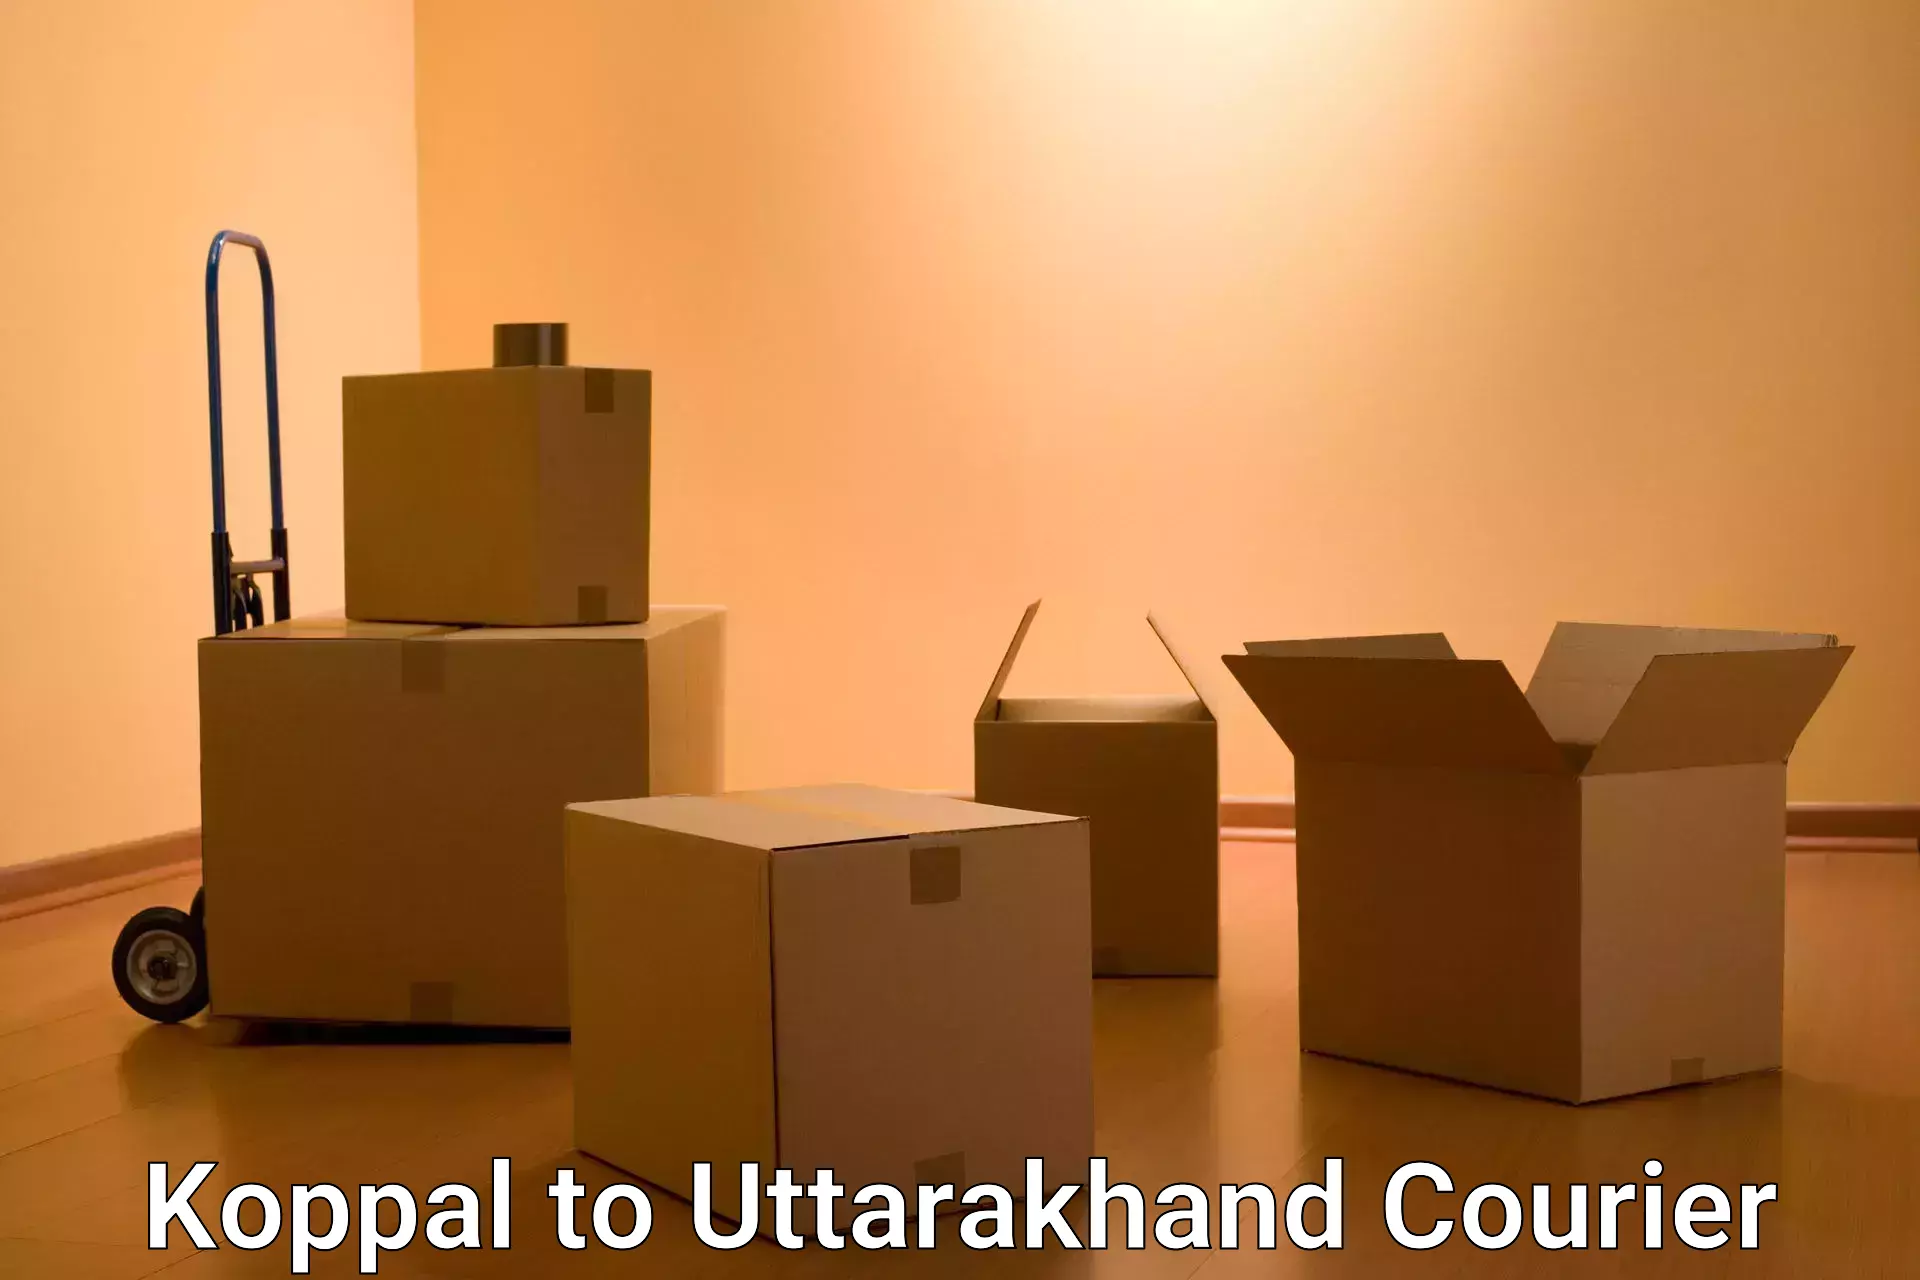 Global logistics network Koppal to Uttarakhand